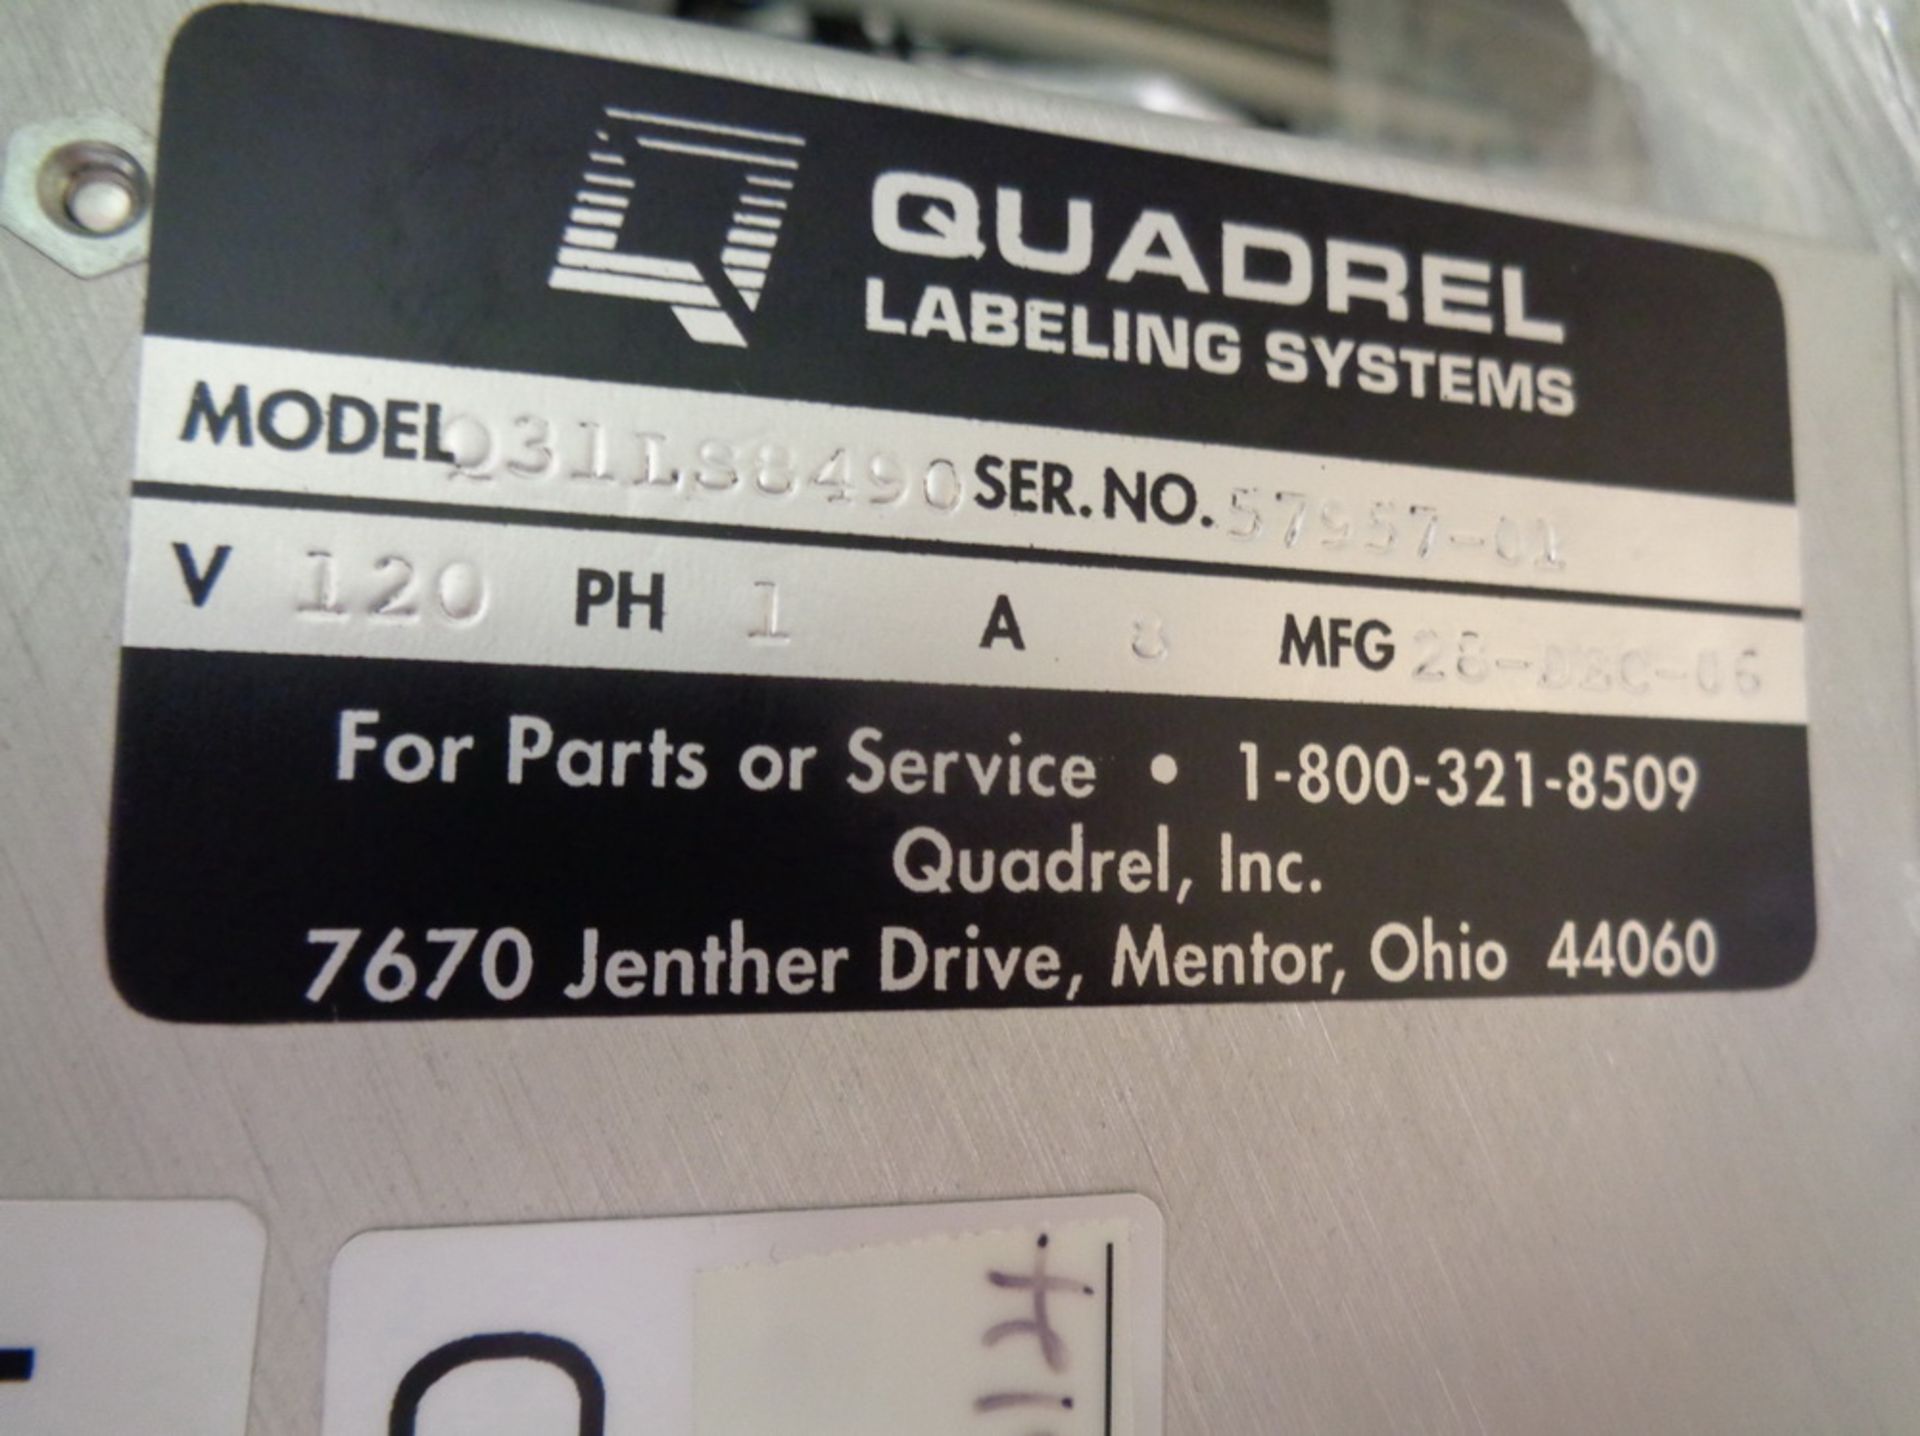 Quadrel Print and Apply Pressure Sensitive Carton Labeler, Model Q31-LS8490, S/N 57957-01 - Image 10 of 10